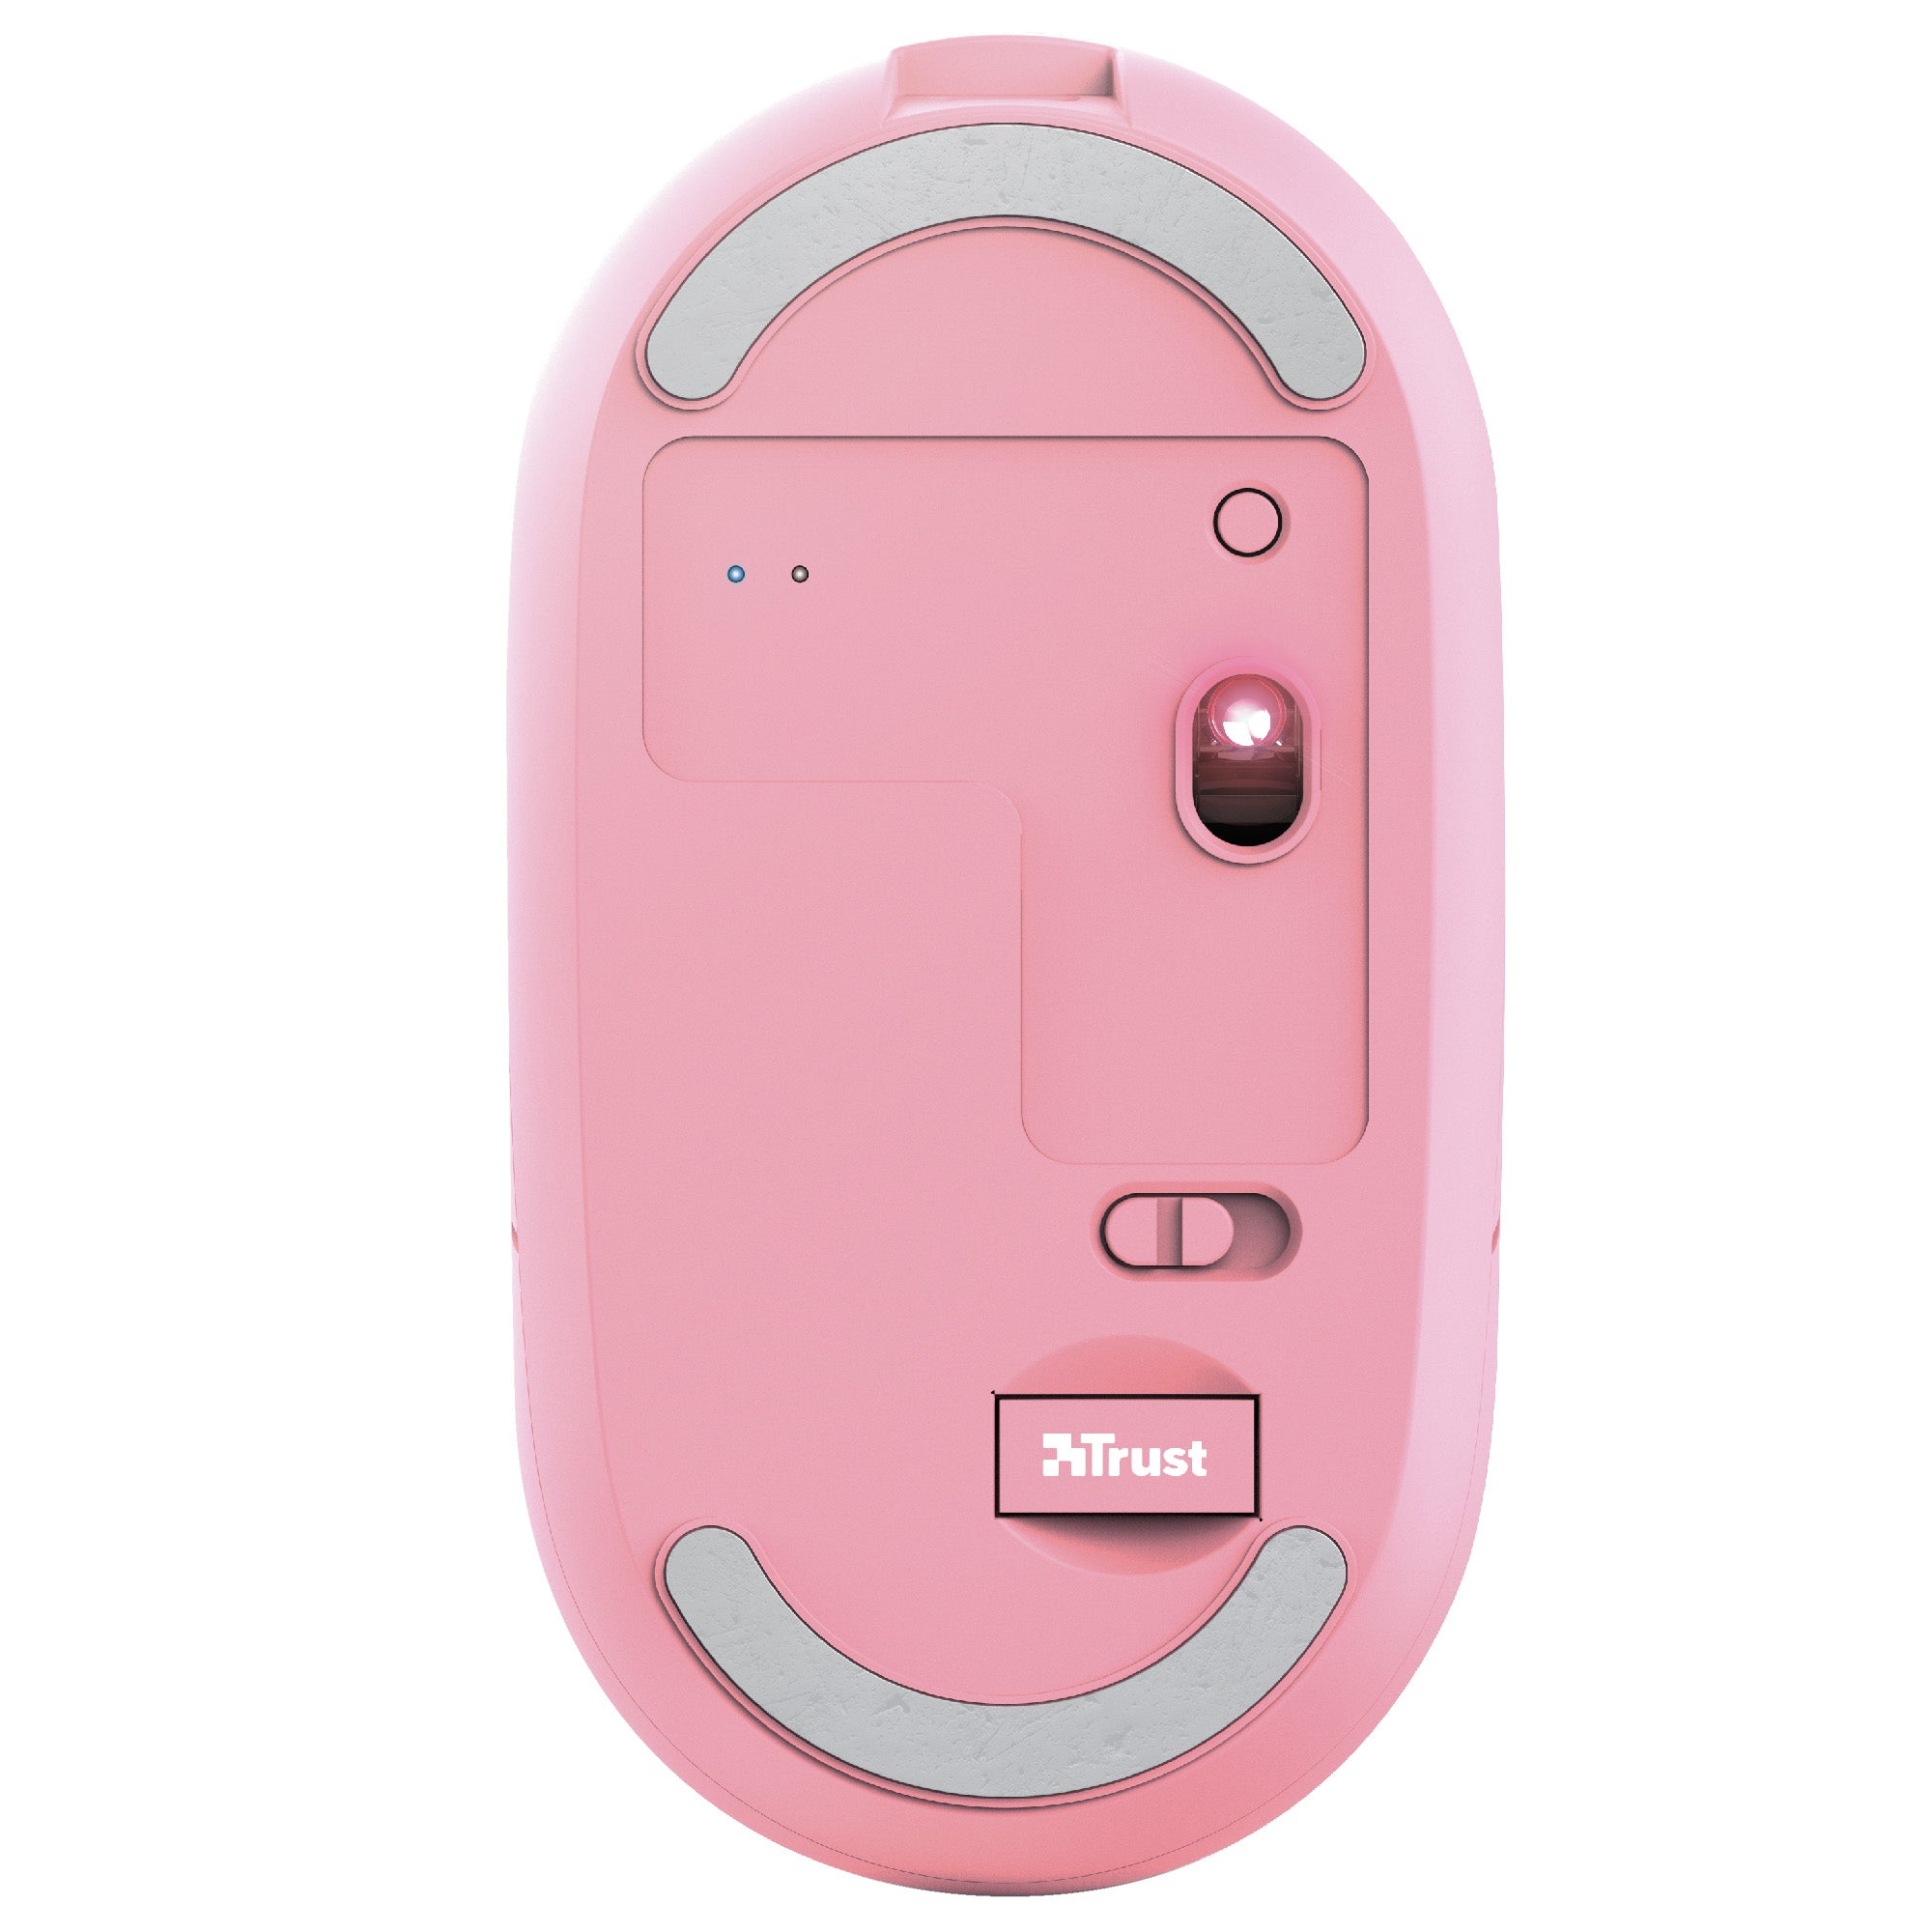 trust-mouse-ultrasottile-wireless-ricaricabile-puck-rosa